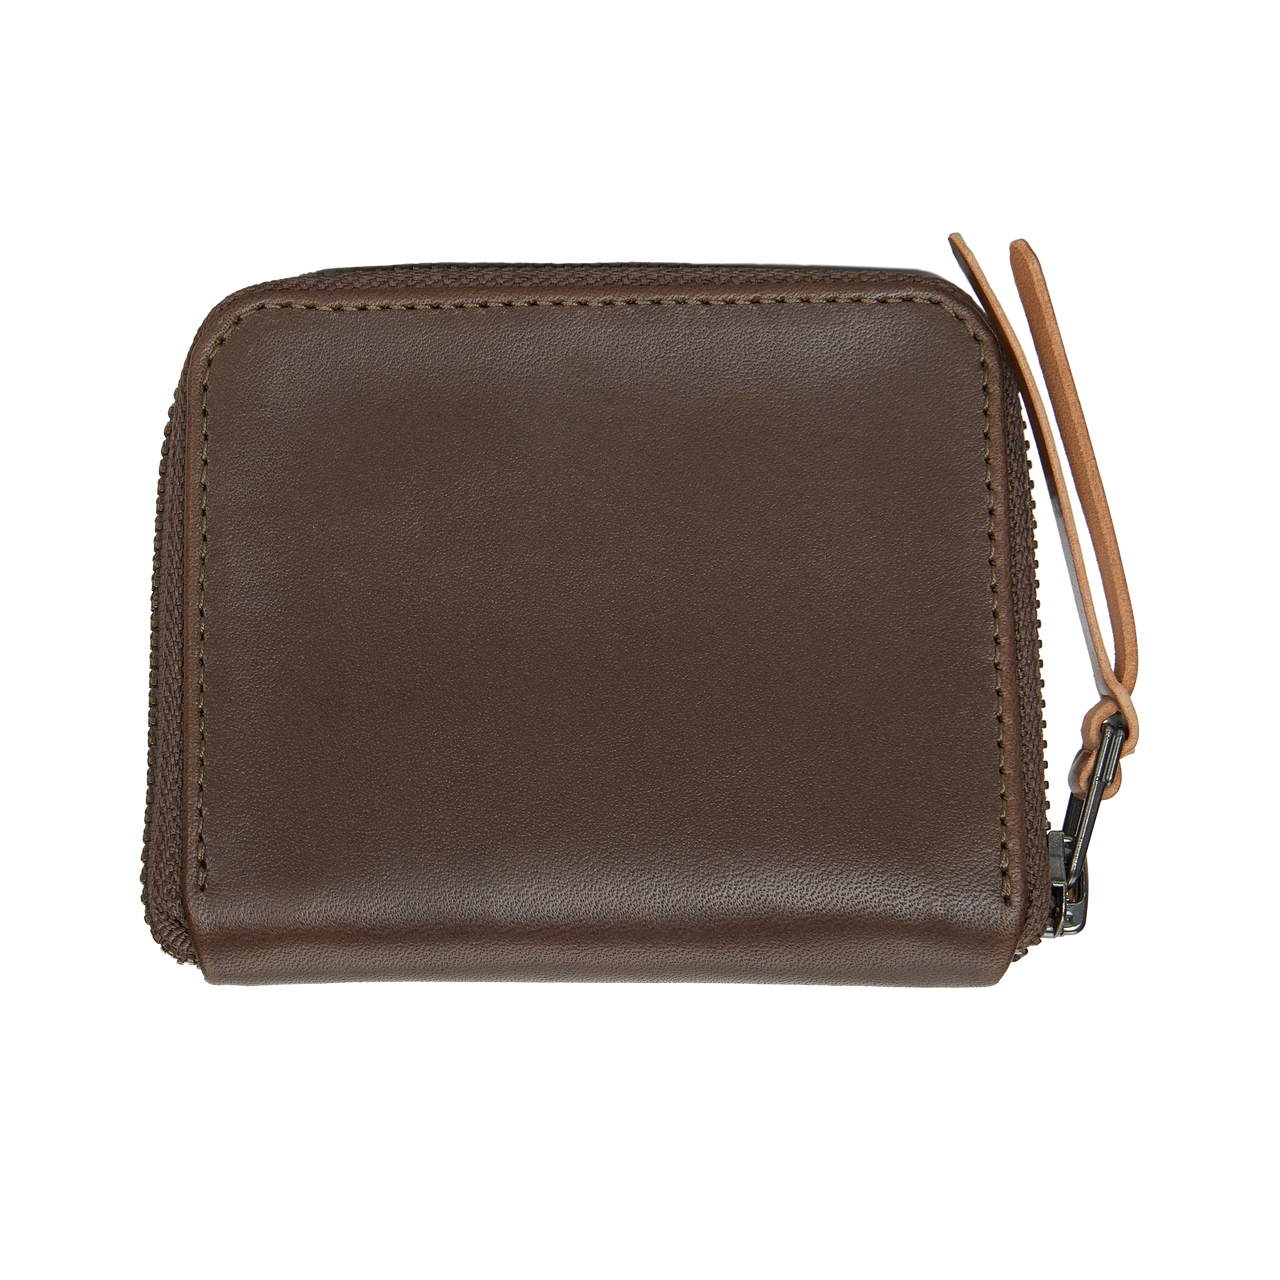 Makr 3-Quarter Zip Wallet in Chromexcel Leather